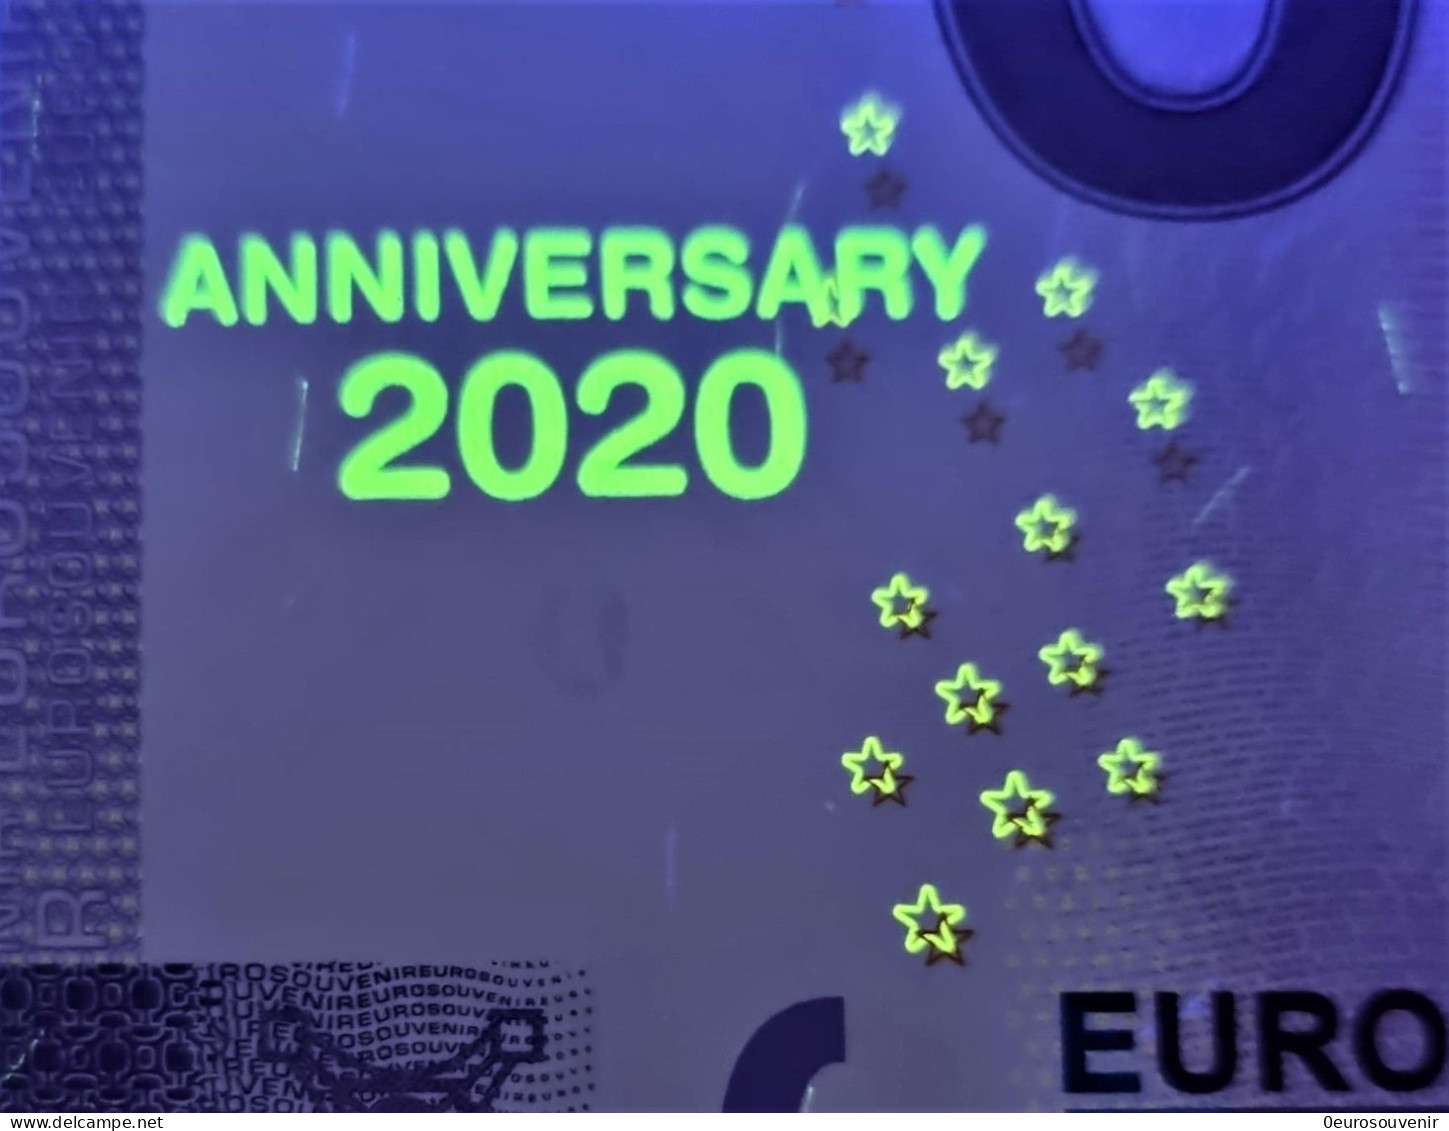 0-Euro XEJB 2021-8 AFFENBERG SALEM - 45 JAHRE Set NORMAL+ANNIVERSARY - Privatentwürfe